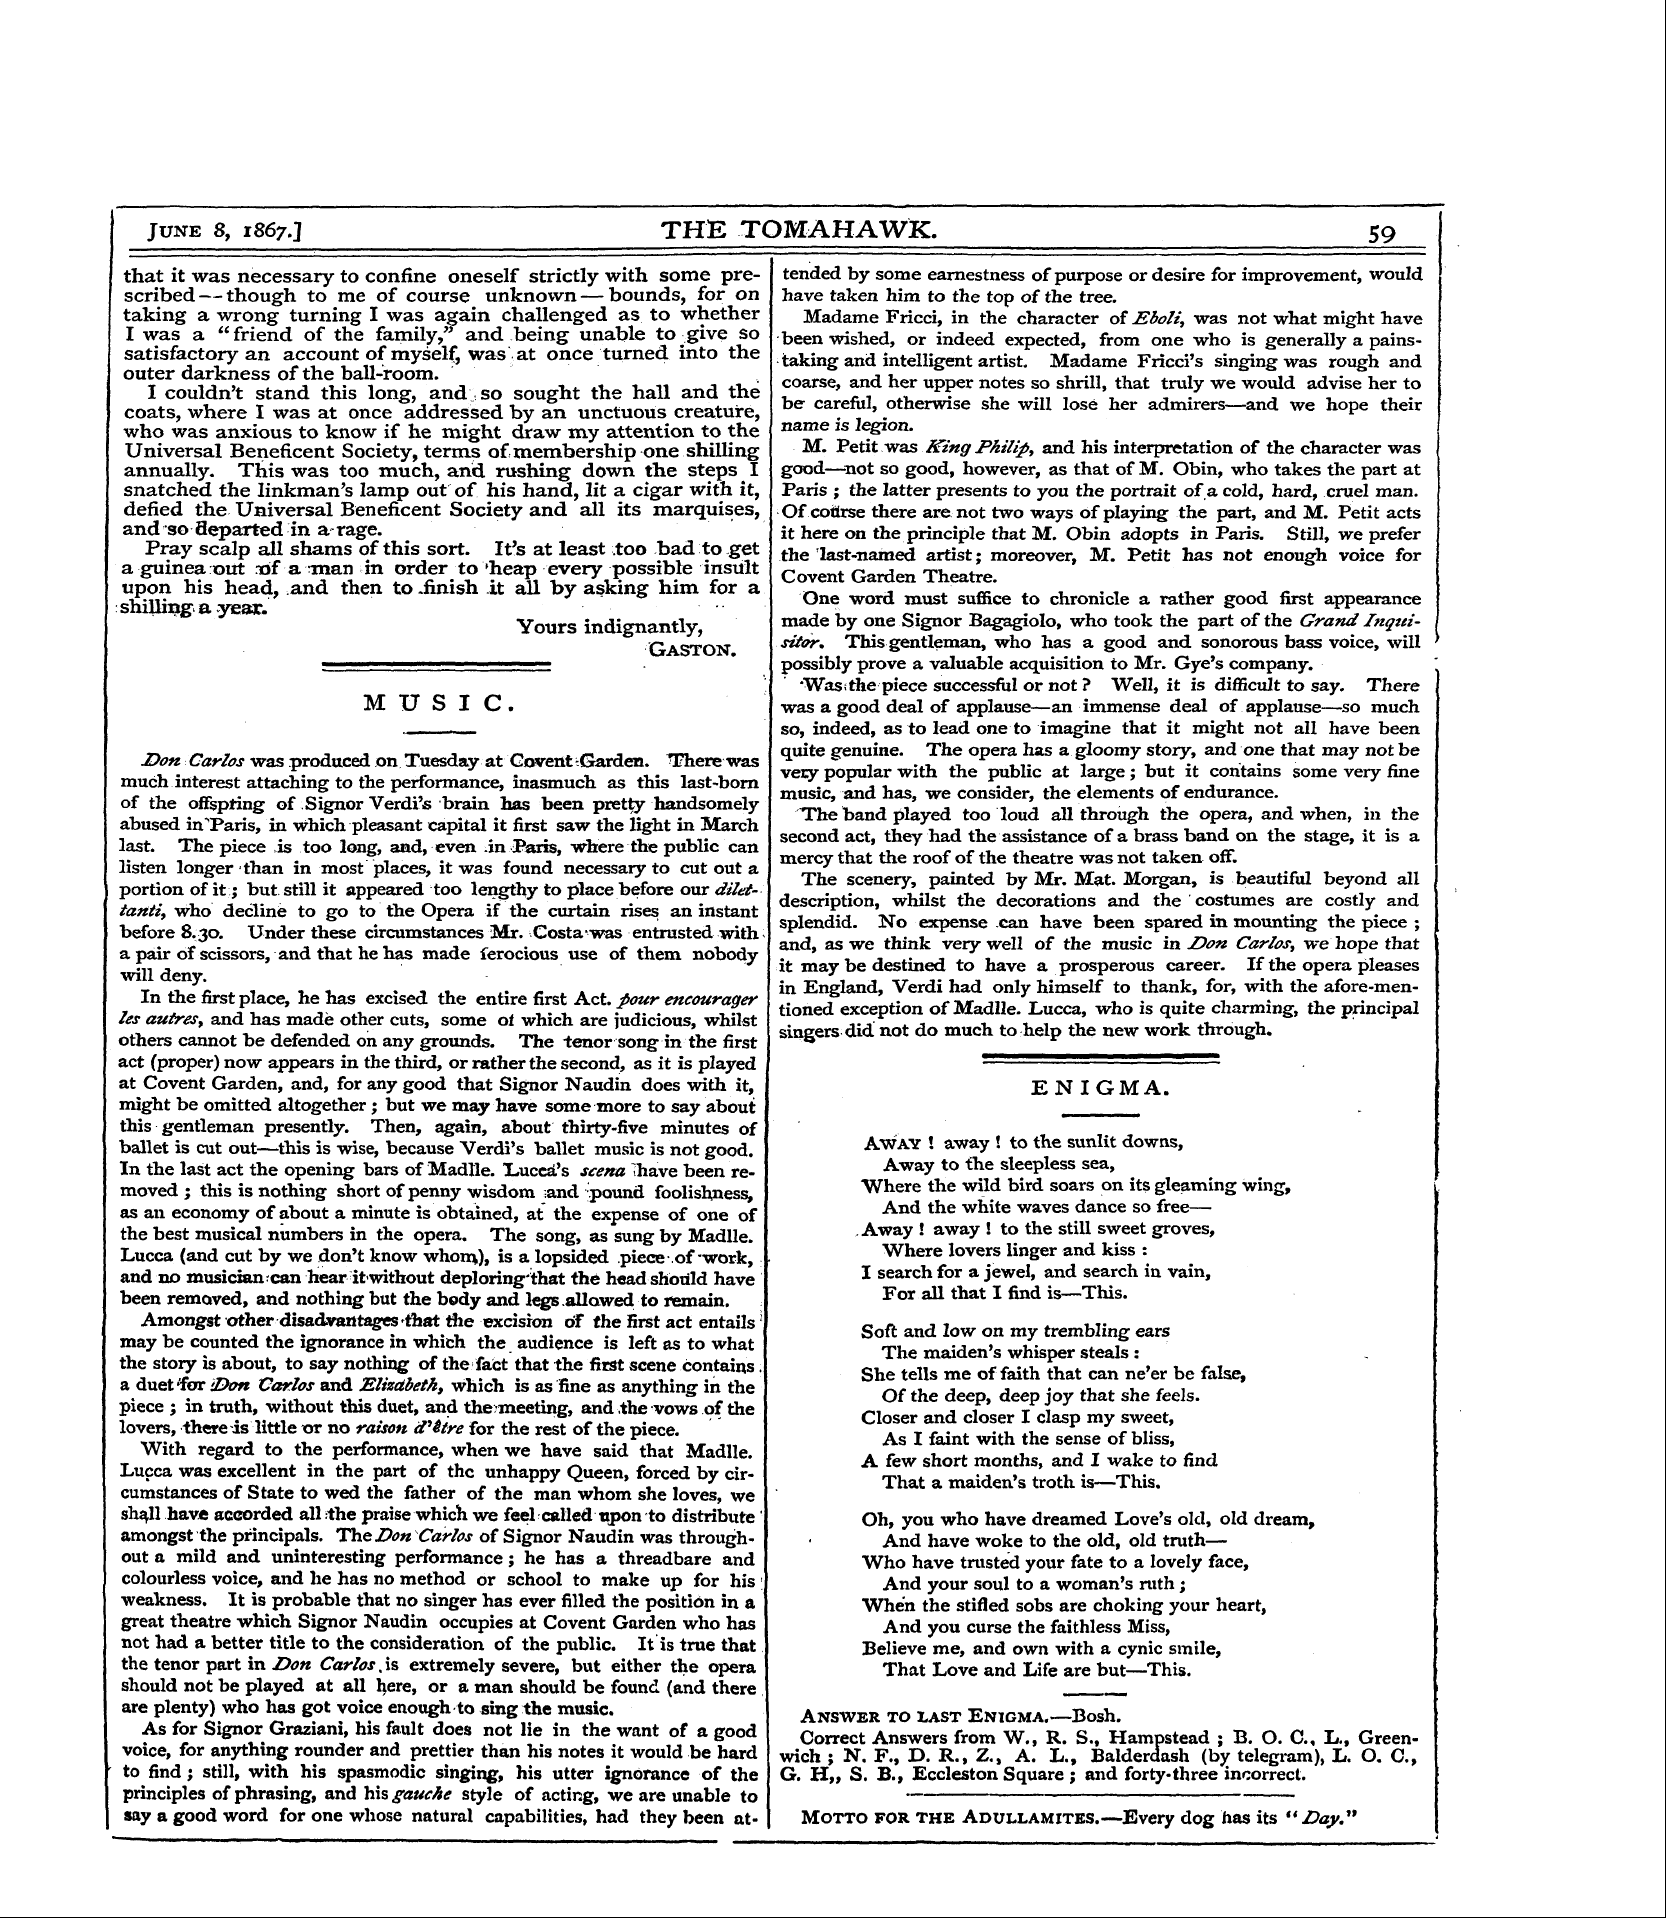 Tomahawk (1867-1870): jS F Y, 1st edition - Music.